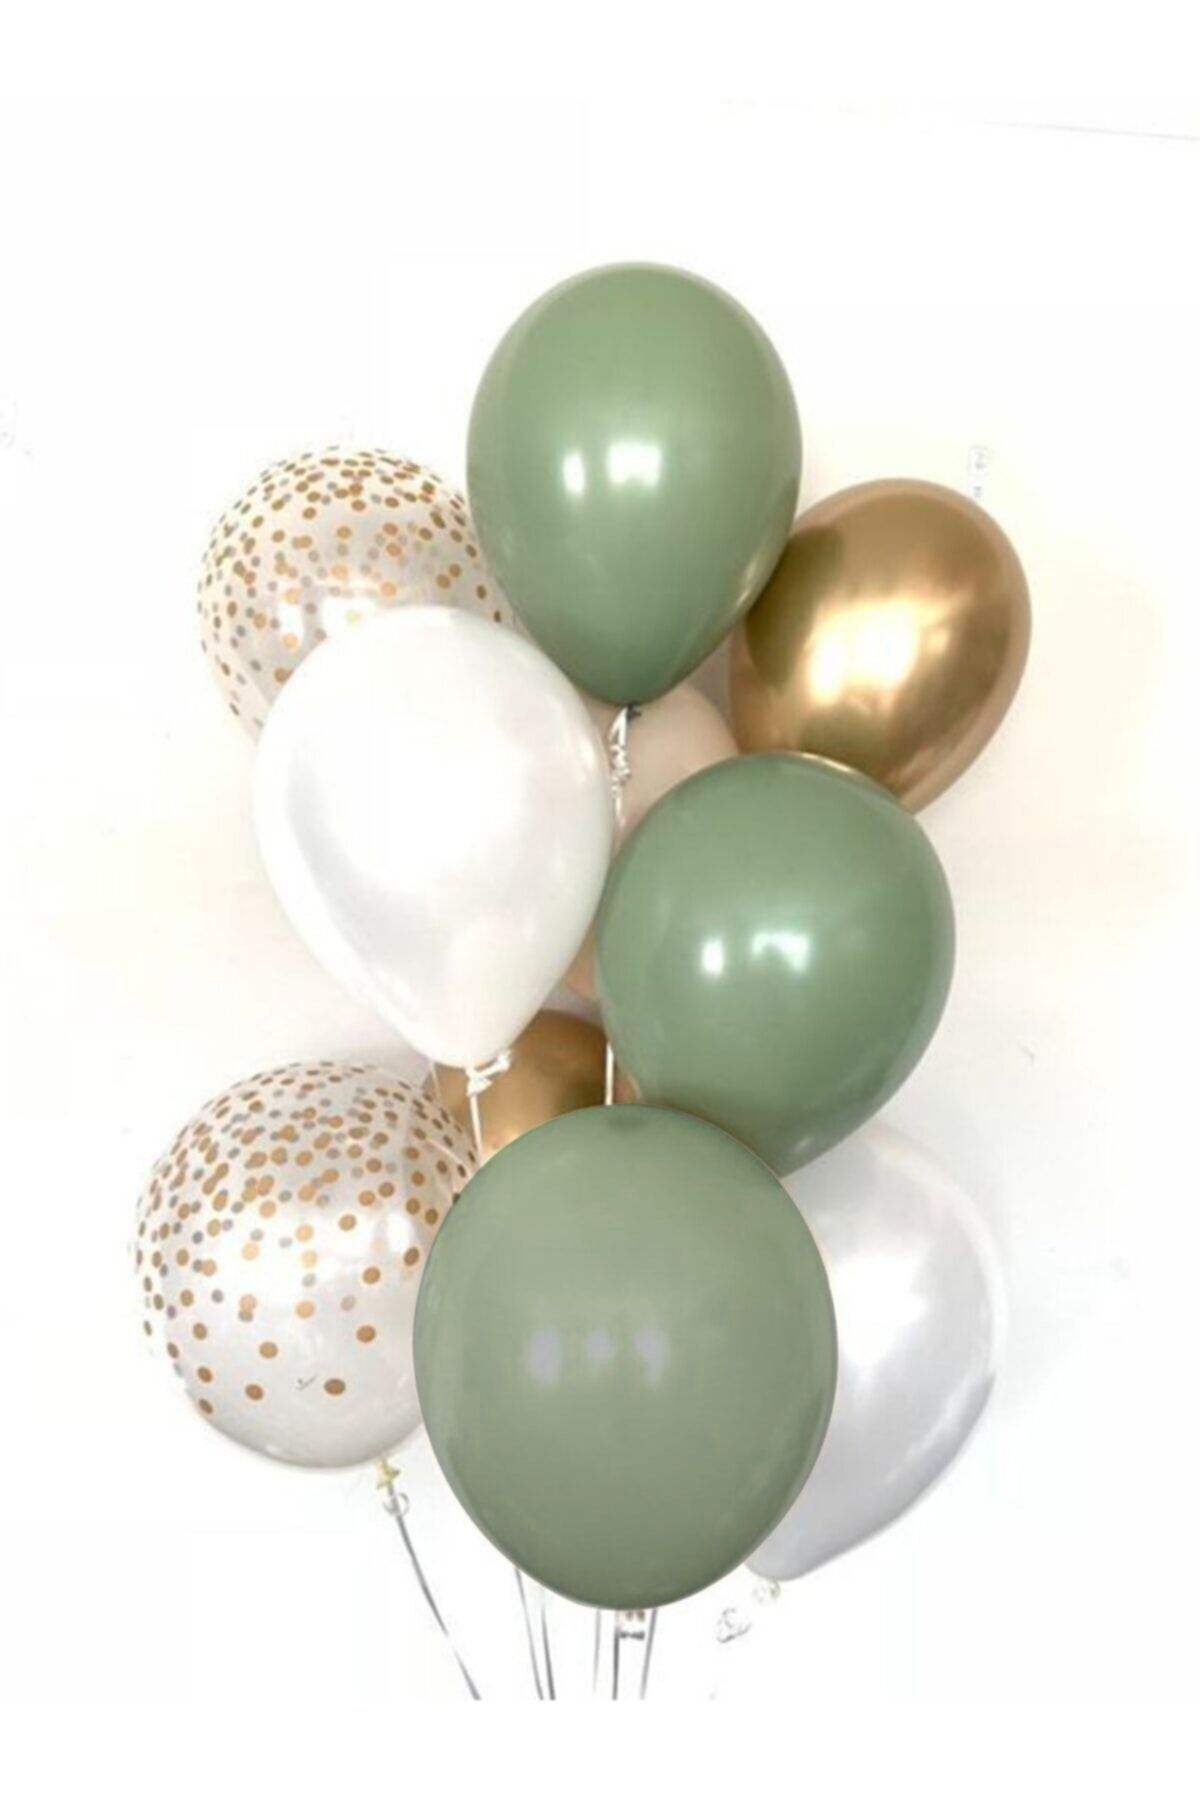 Parti Dolabı 10 Adet Küf Yeşilli Balon Demeti Krom Altın 3 Küf Yeşili + 3 Beyaz + 2 Krom Altın + 2 Şeffaf Balon